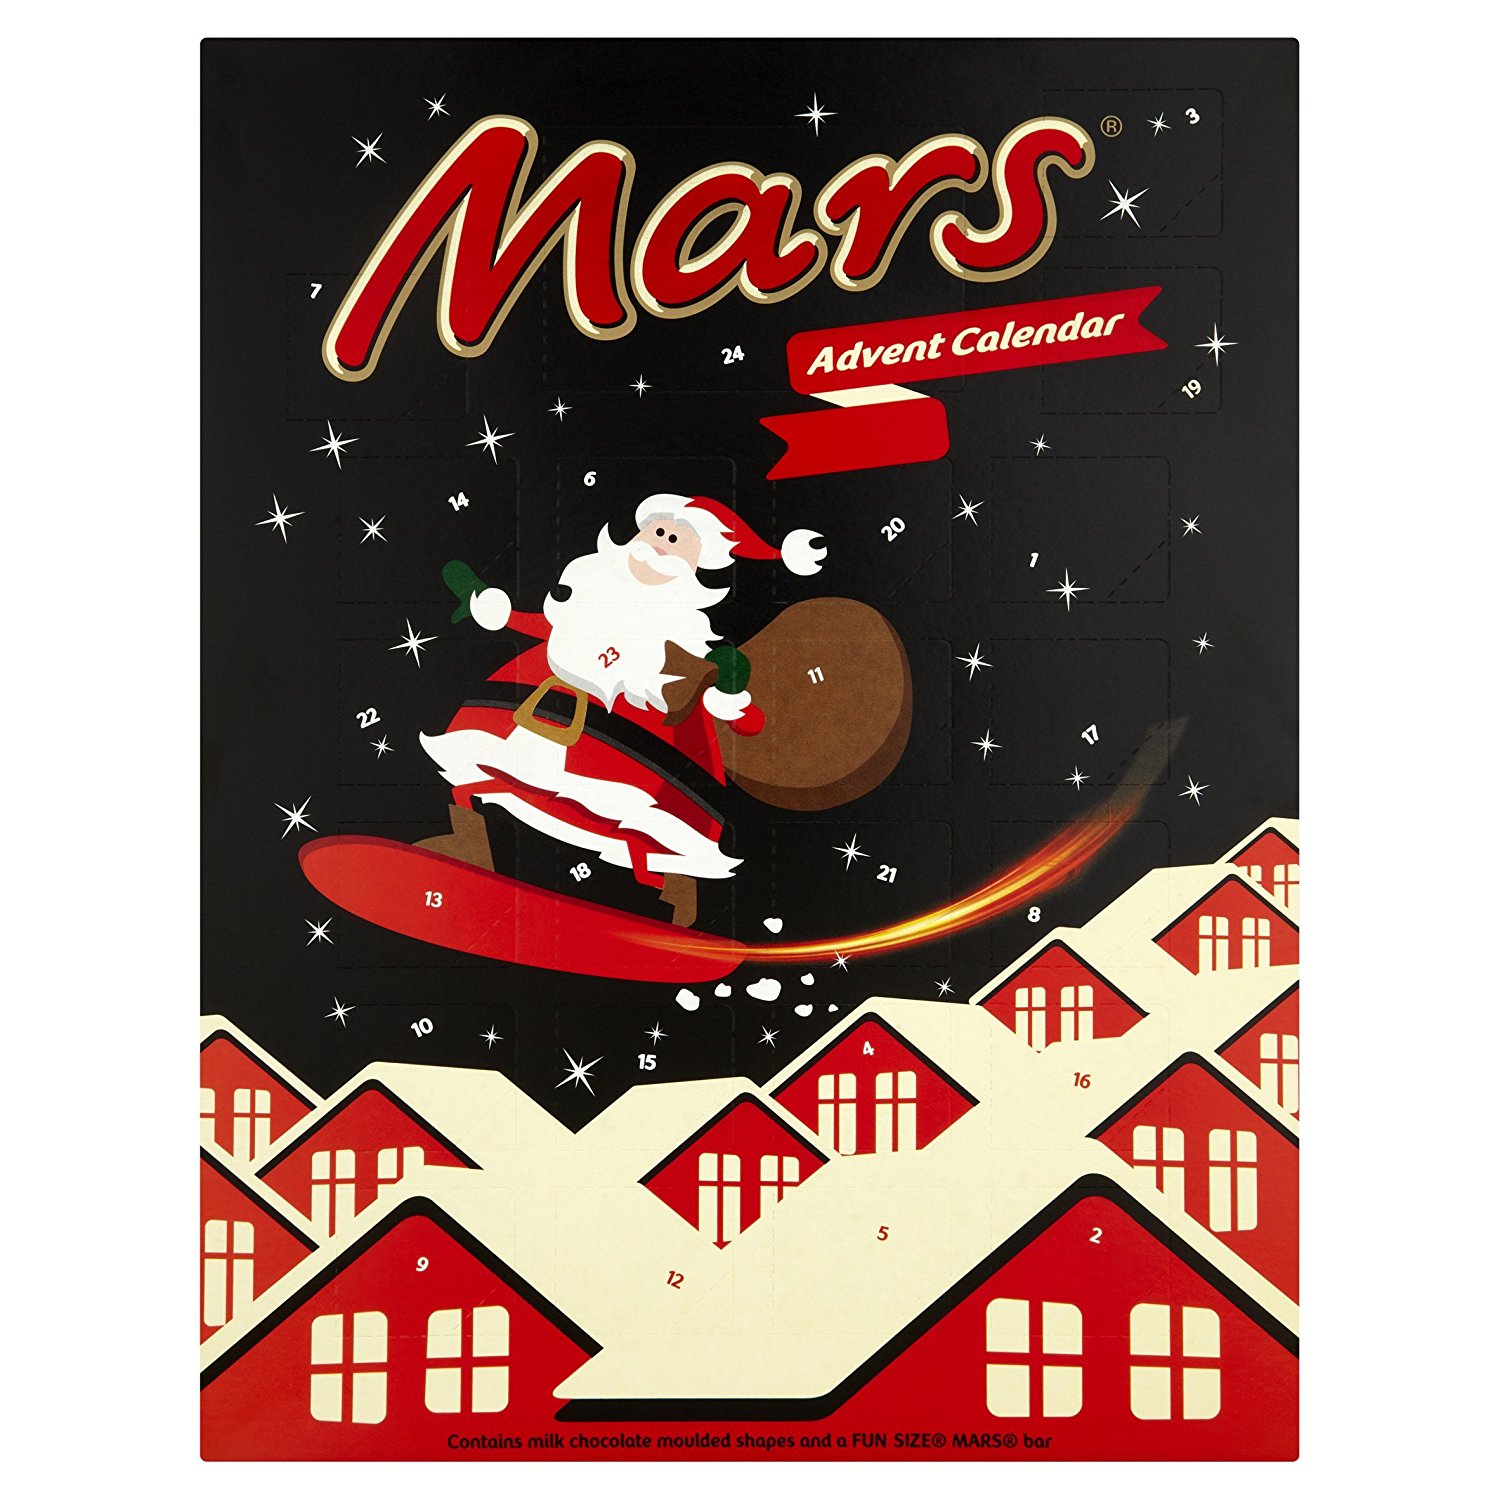 Mars Advent Calendar - 111g: Amazon.com: Grocery & Gourmet Food